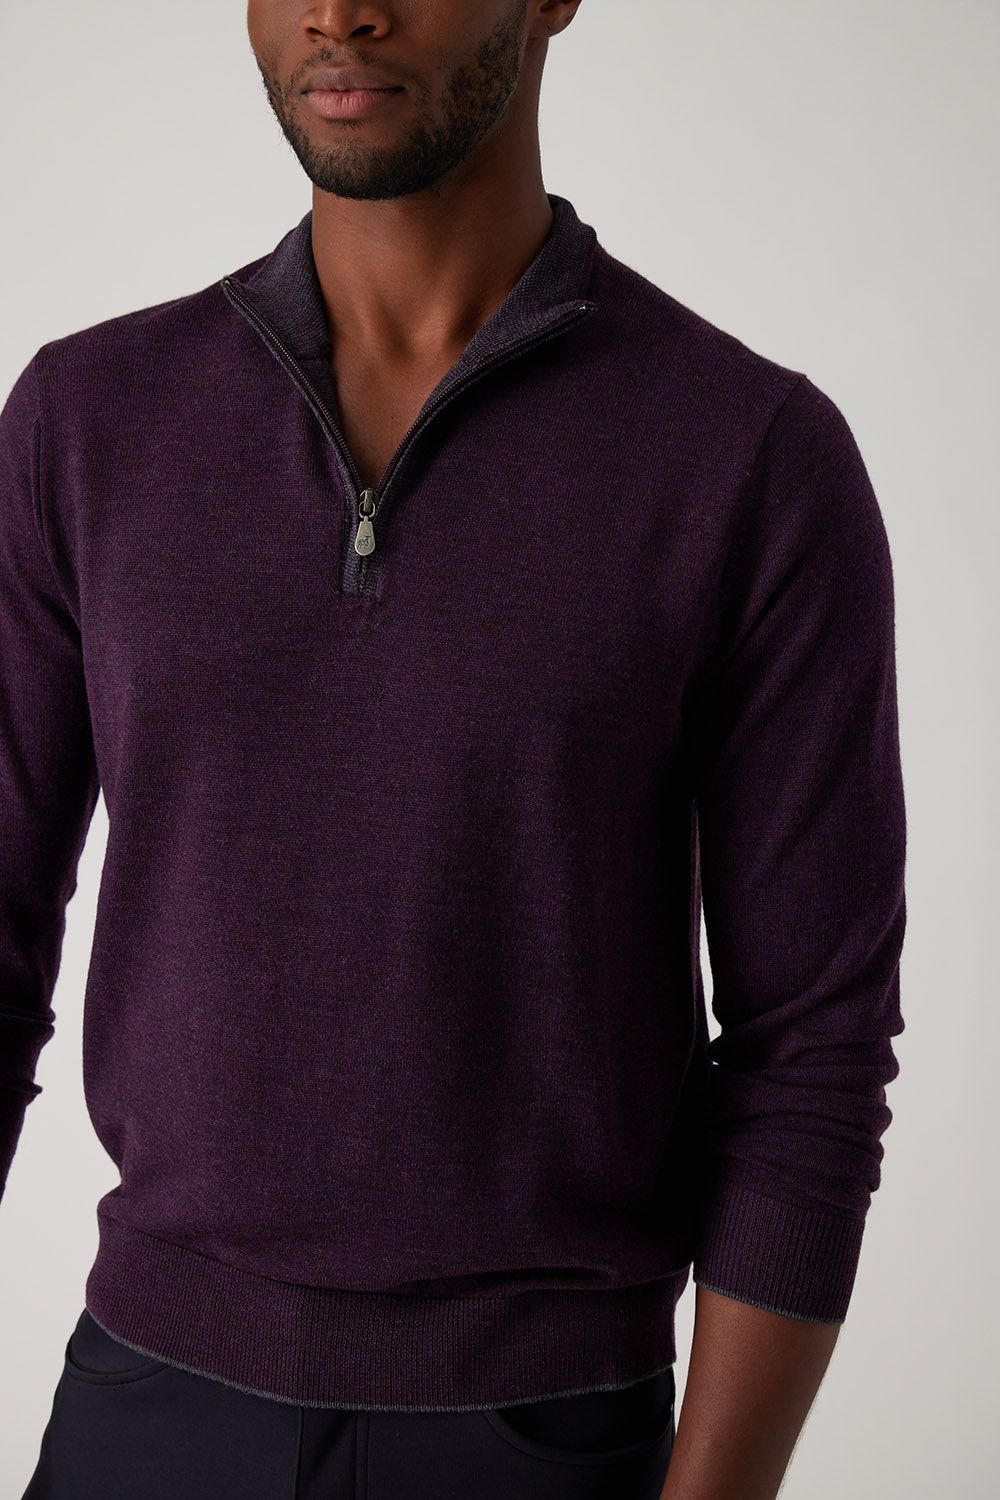 Raffi Linea Uomo Italian Merino Wool Full V Neck Sweater - Menswear